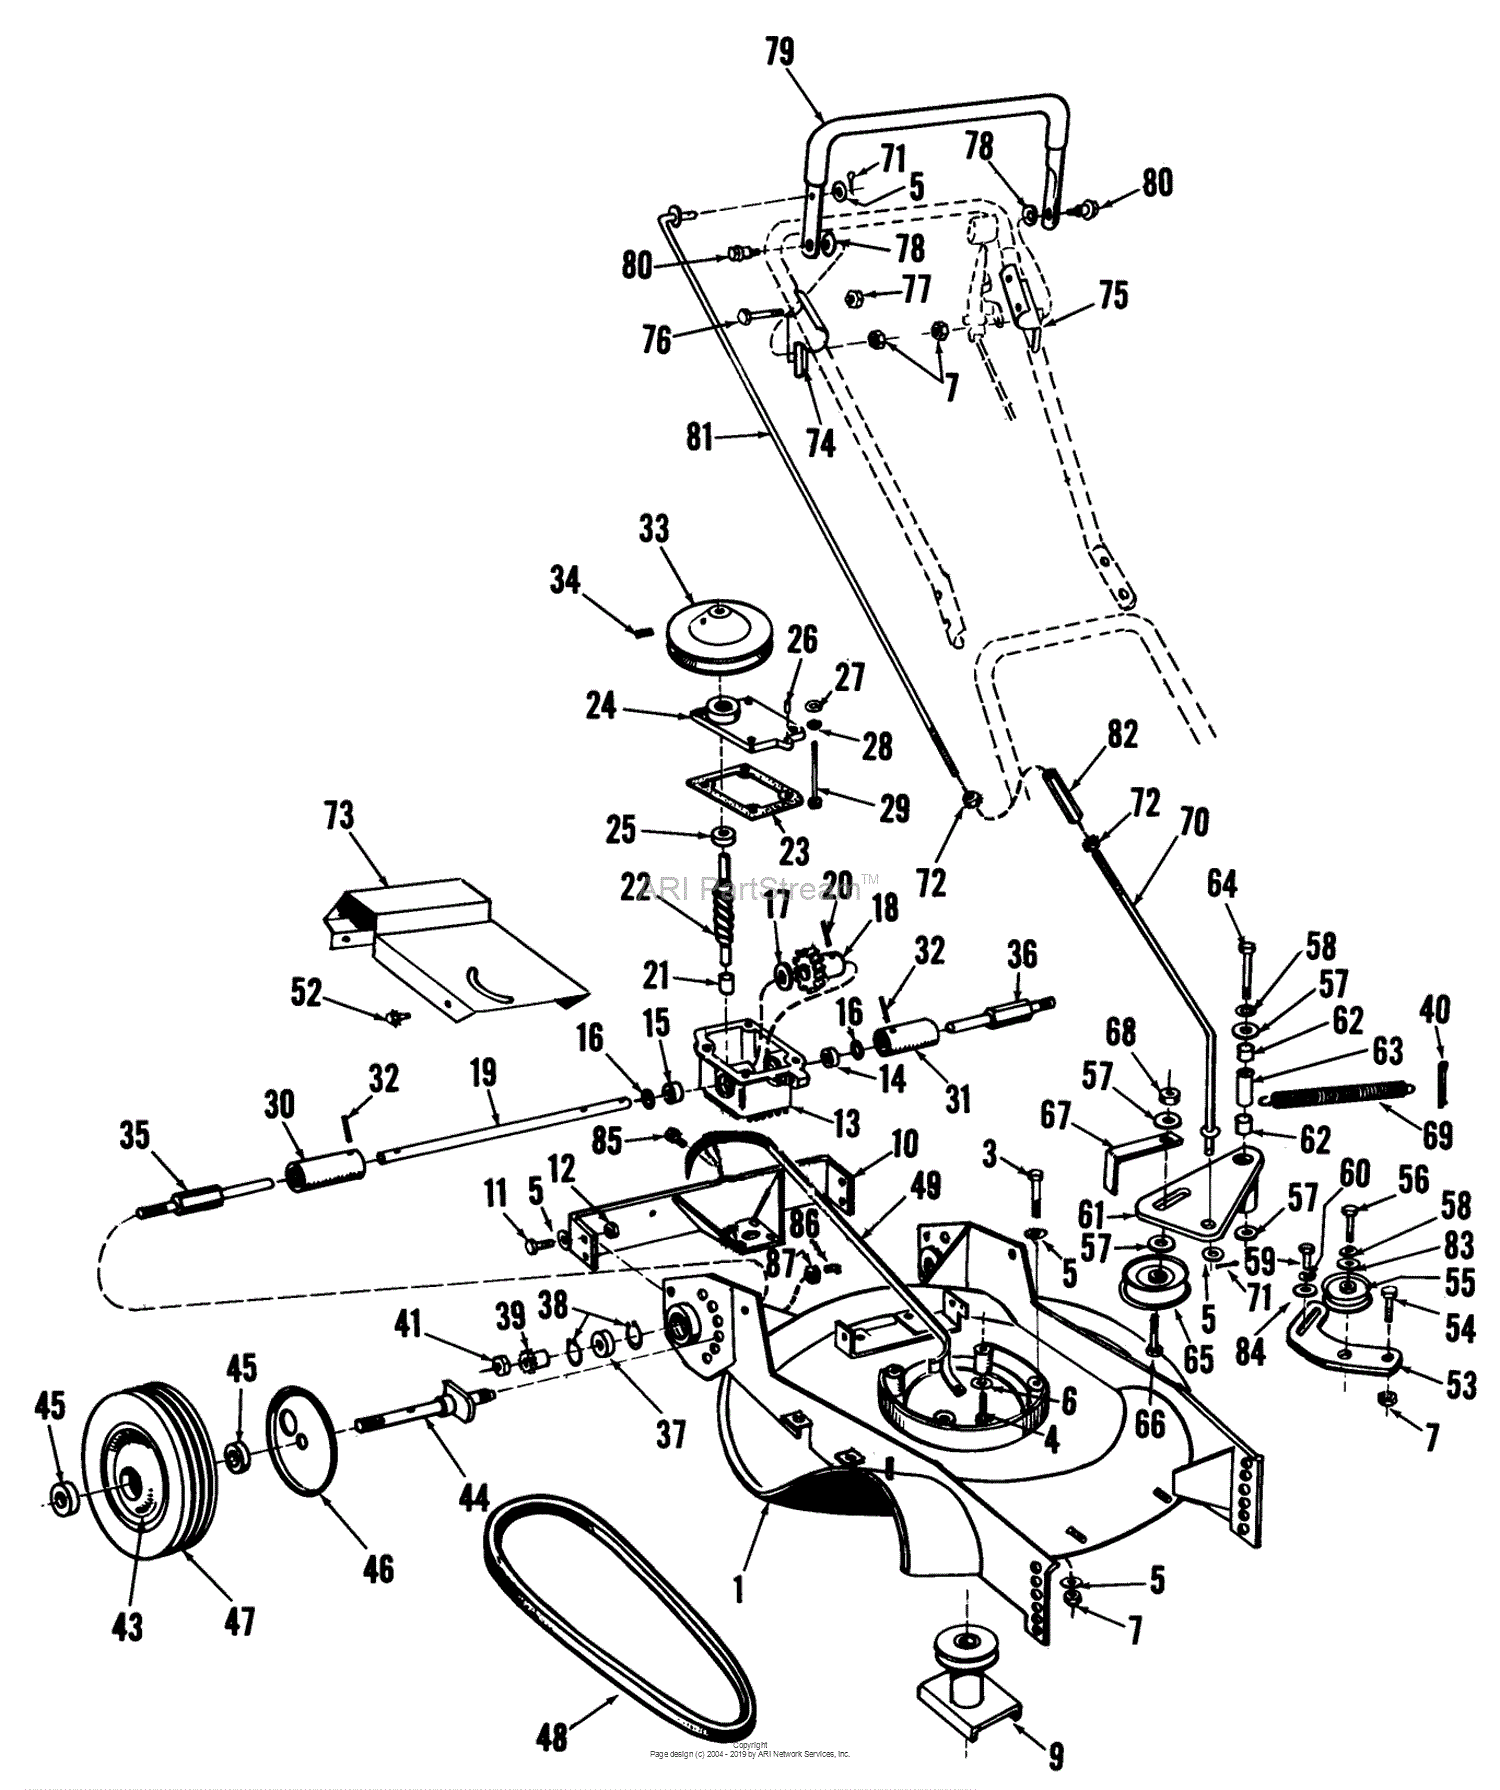 Toro Self Propelled Lawn Mower Parts Diagram Heat Exchanger Spare Parts